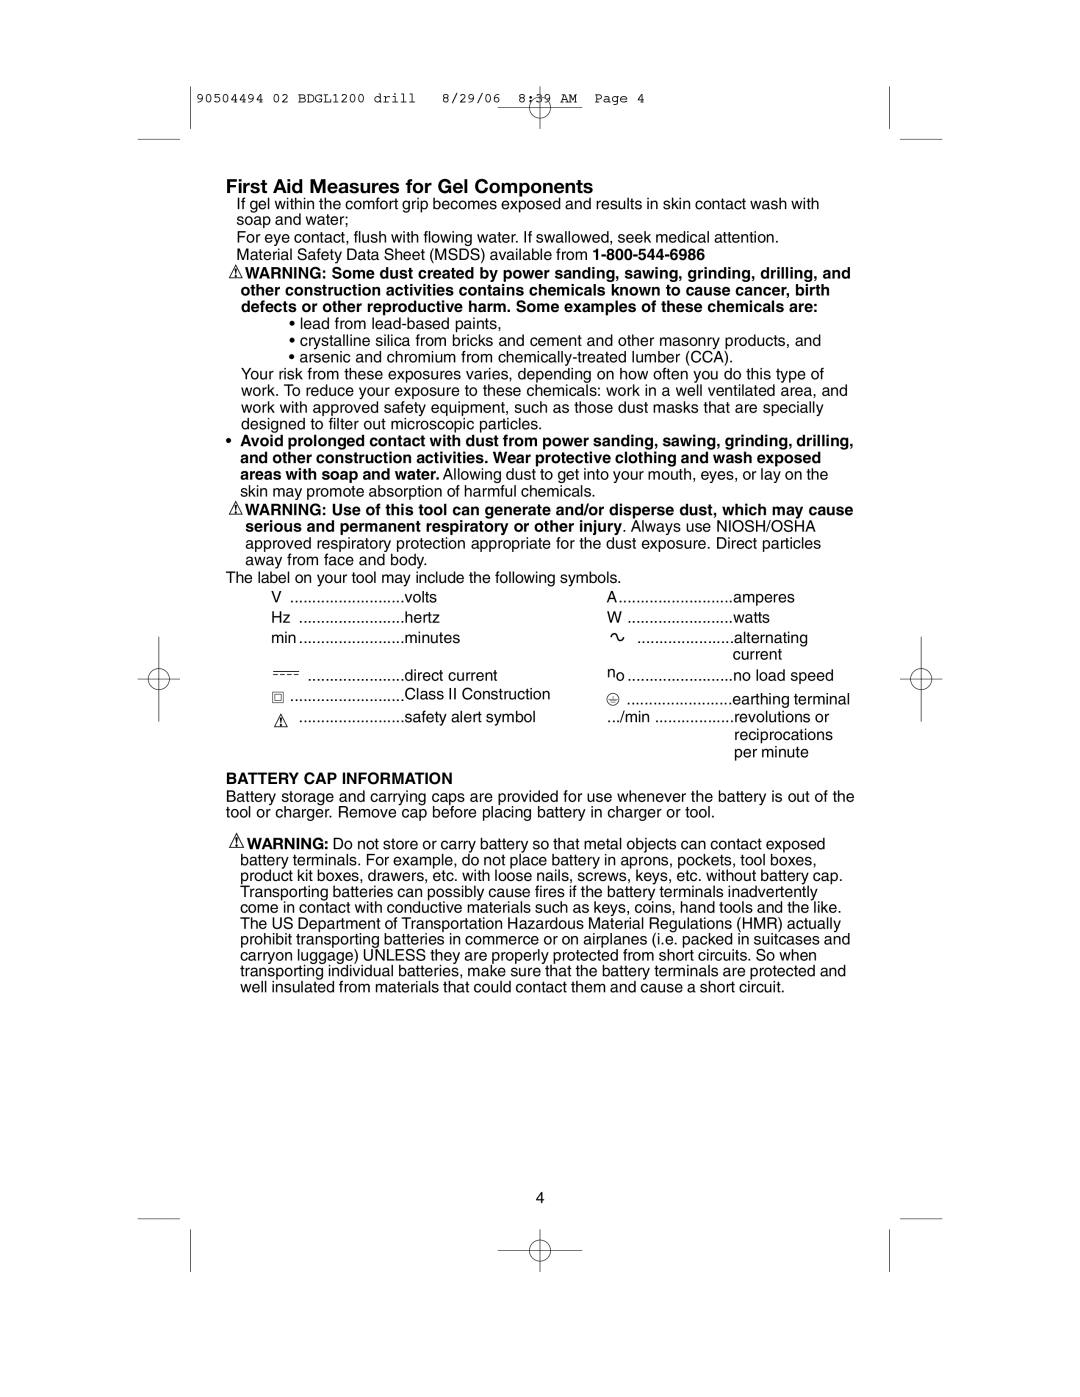 Black & Decker BDGL1800, BDGL1440, BDGL1200, 90504494 instruction manual First Aid Measures for Gel Components 